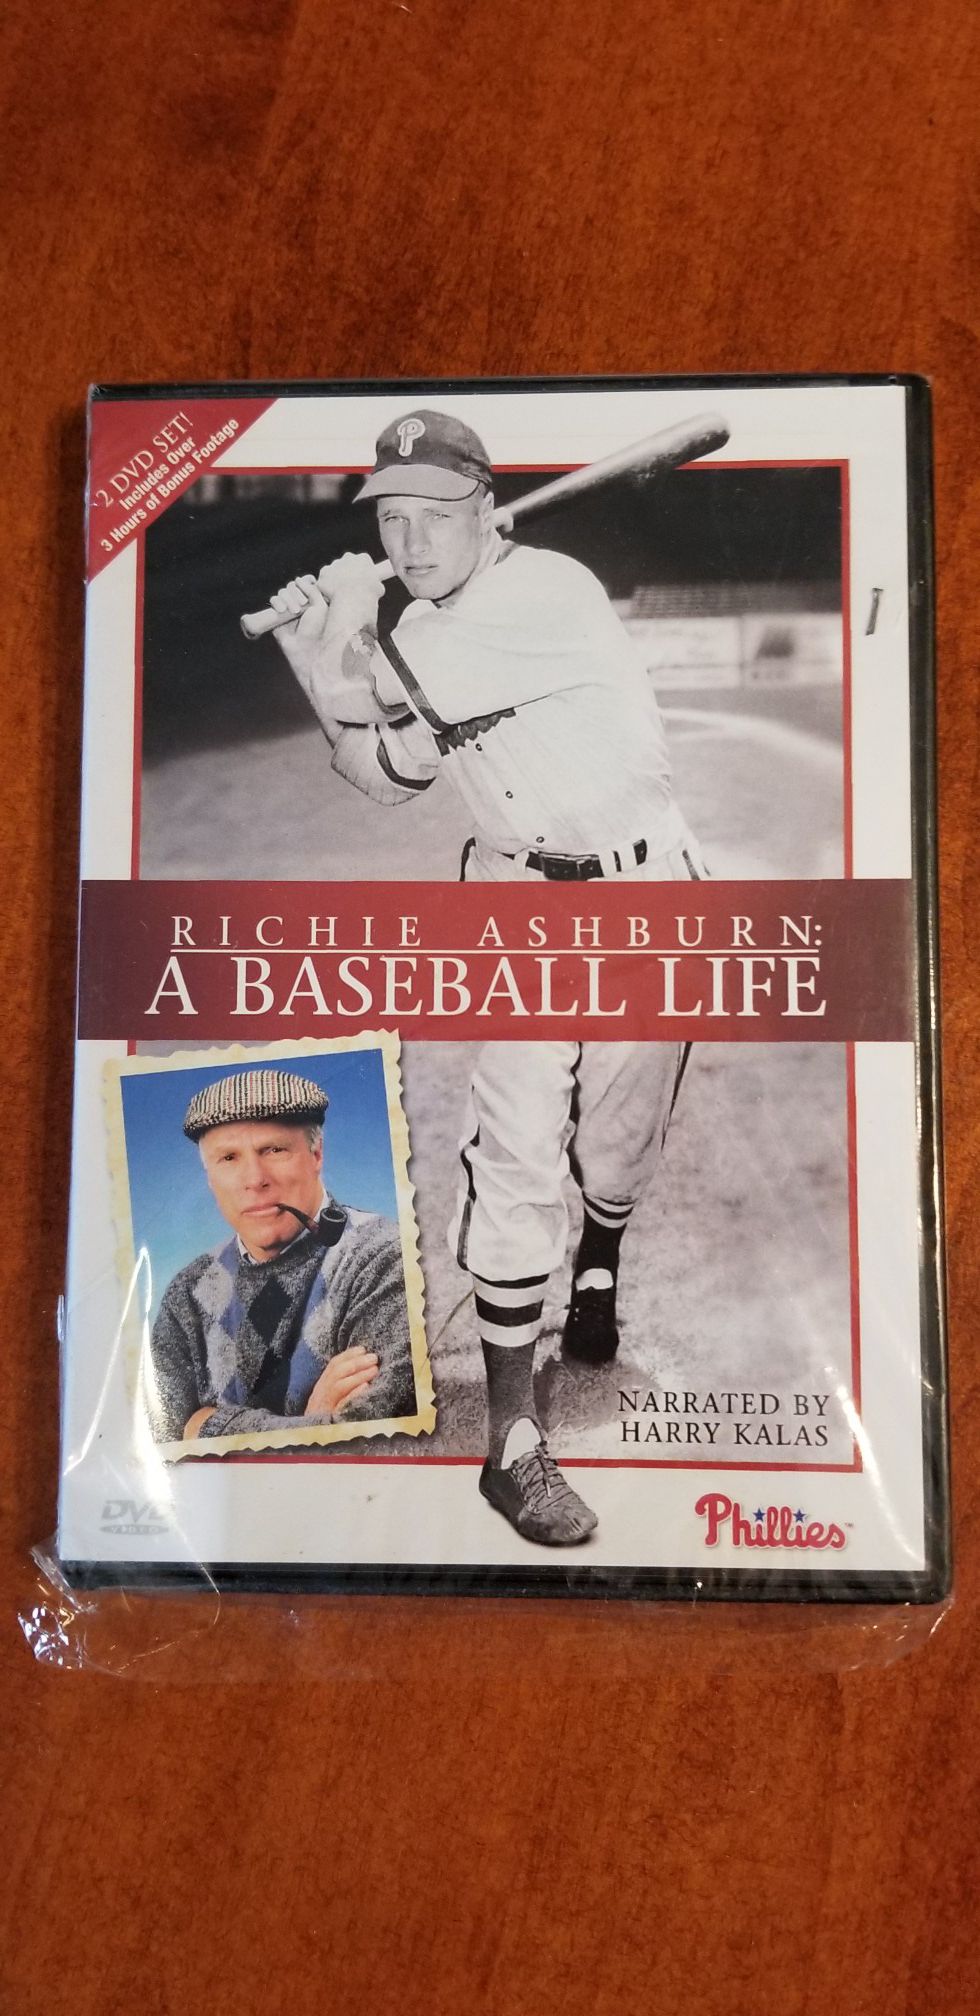 Rich Ashburn, A Baseball Life DVD set